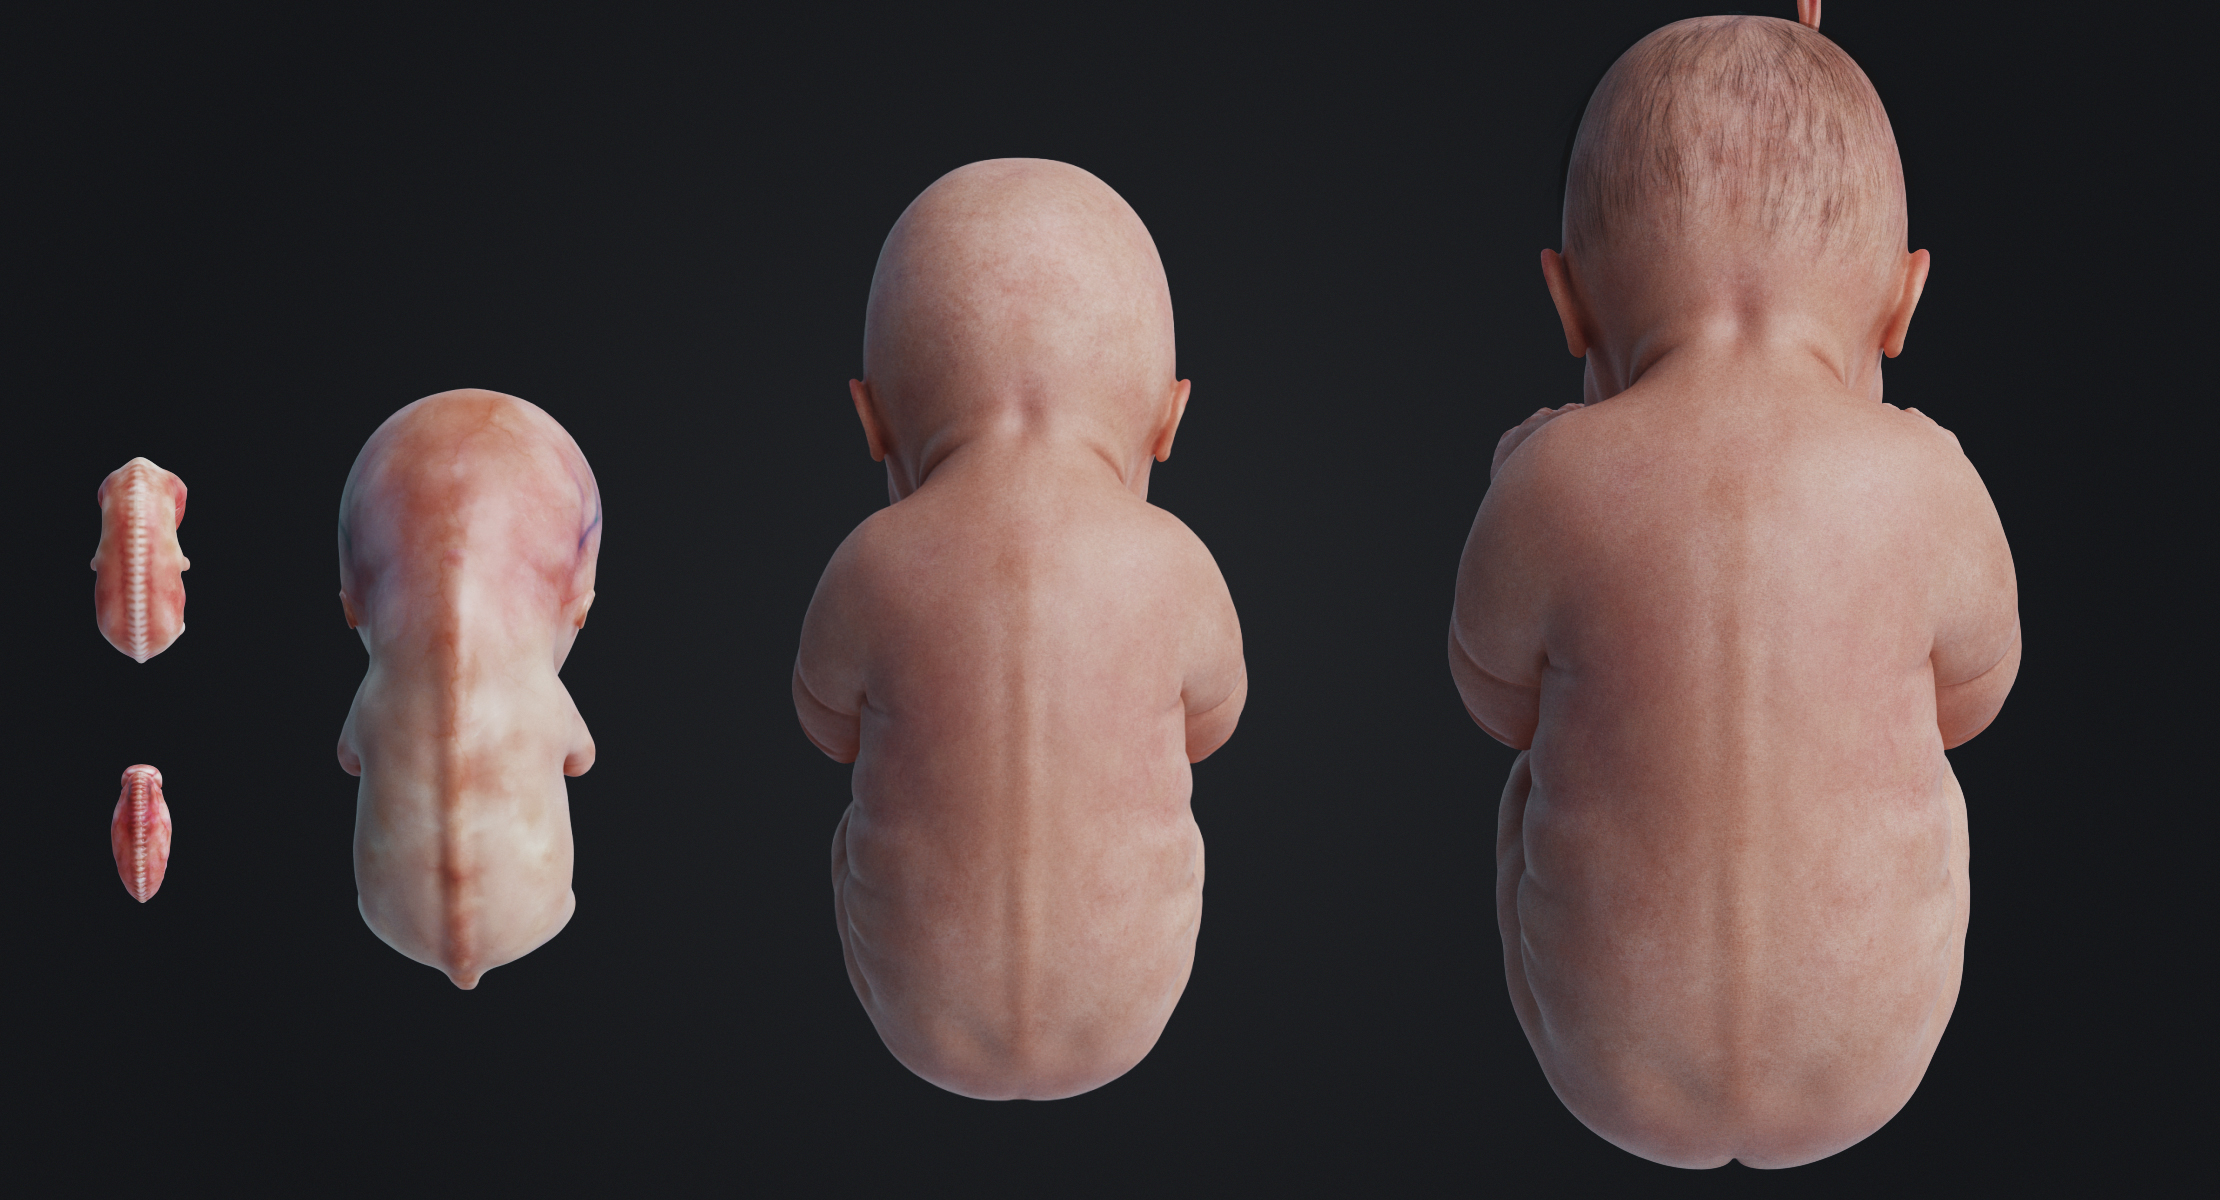 embryo-fetus-human-3d-model-turbosquid-1429509